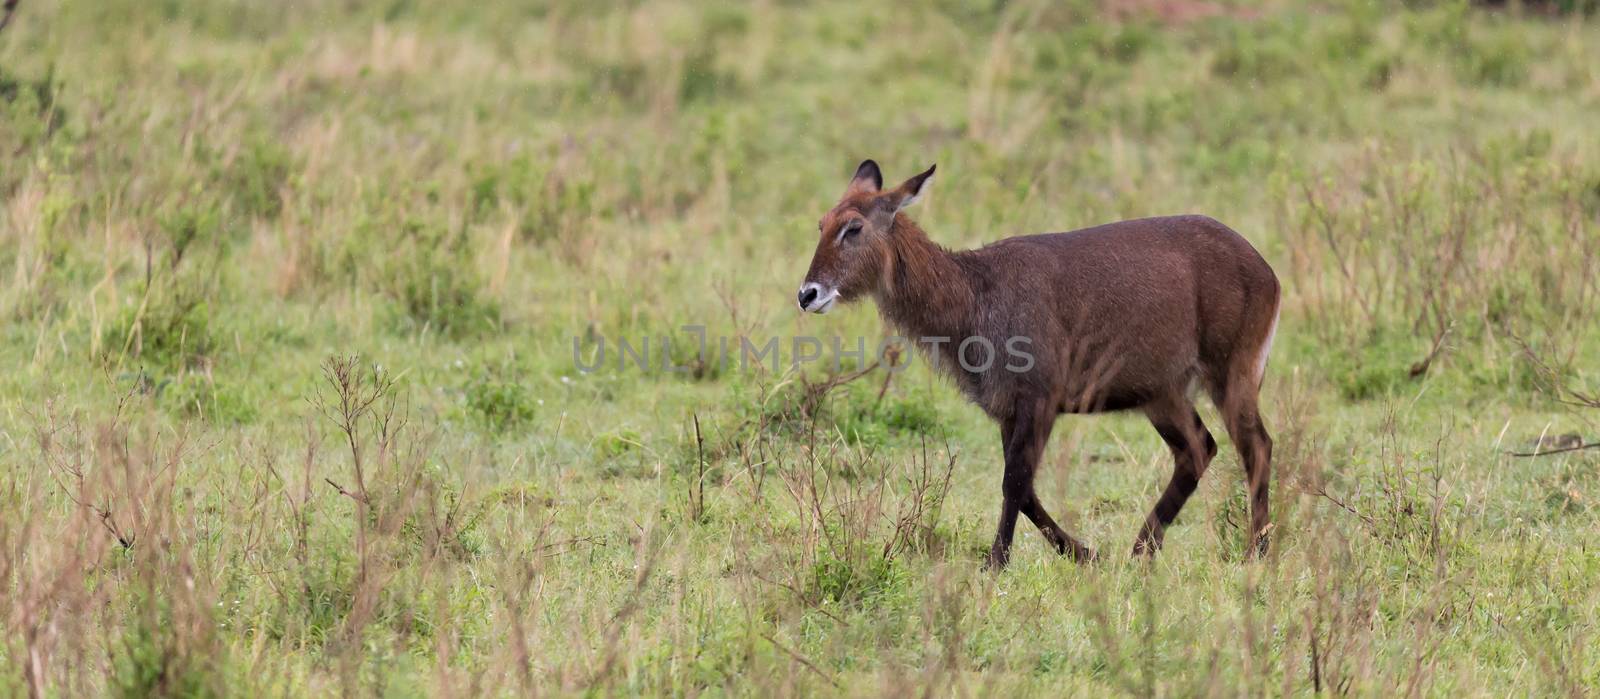 One waterbuck walks in the grass through the Kenyan countryside